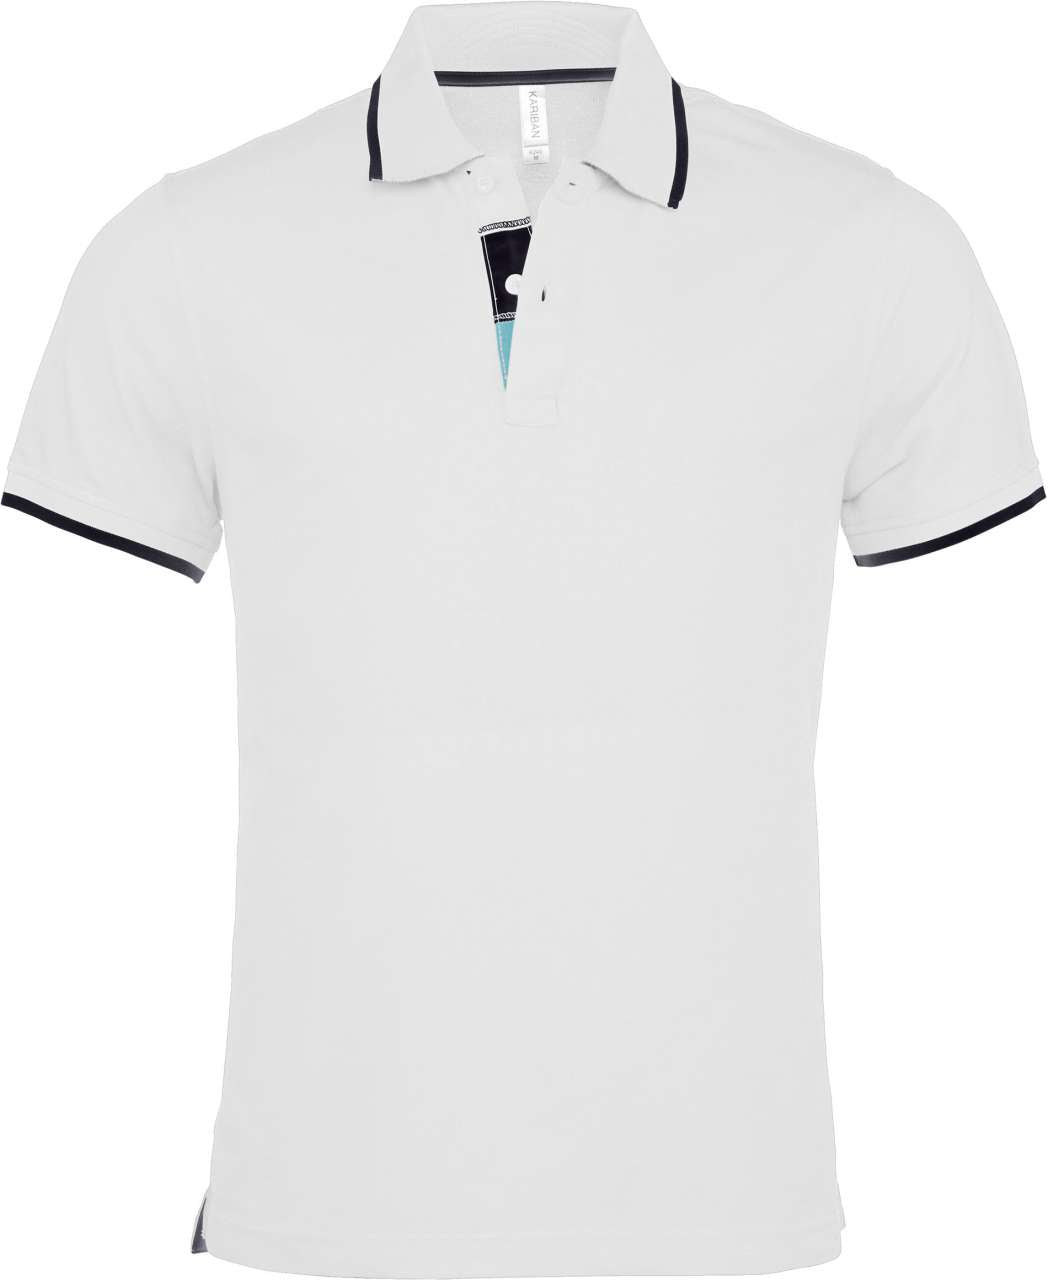 Kariban Herren Polo-Shirt Poloshirt Basic Kontrast Kragen Kurzarm